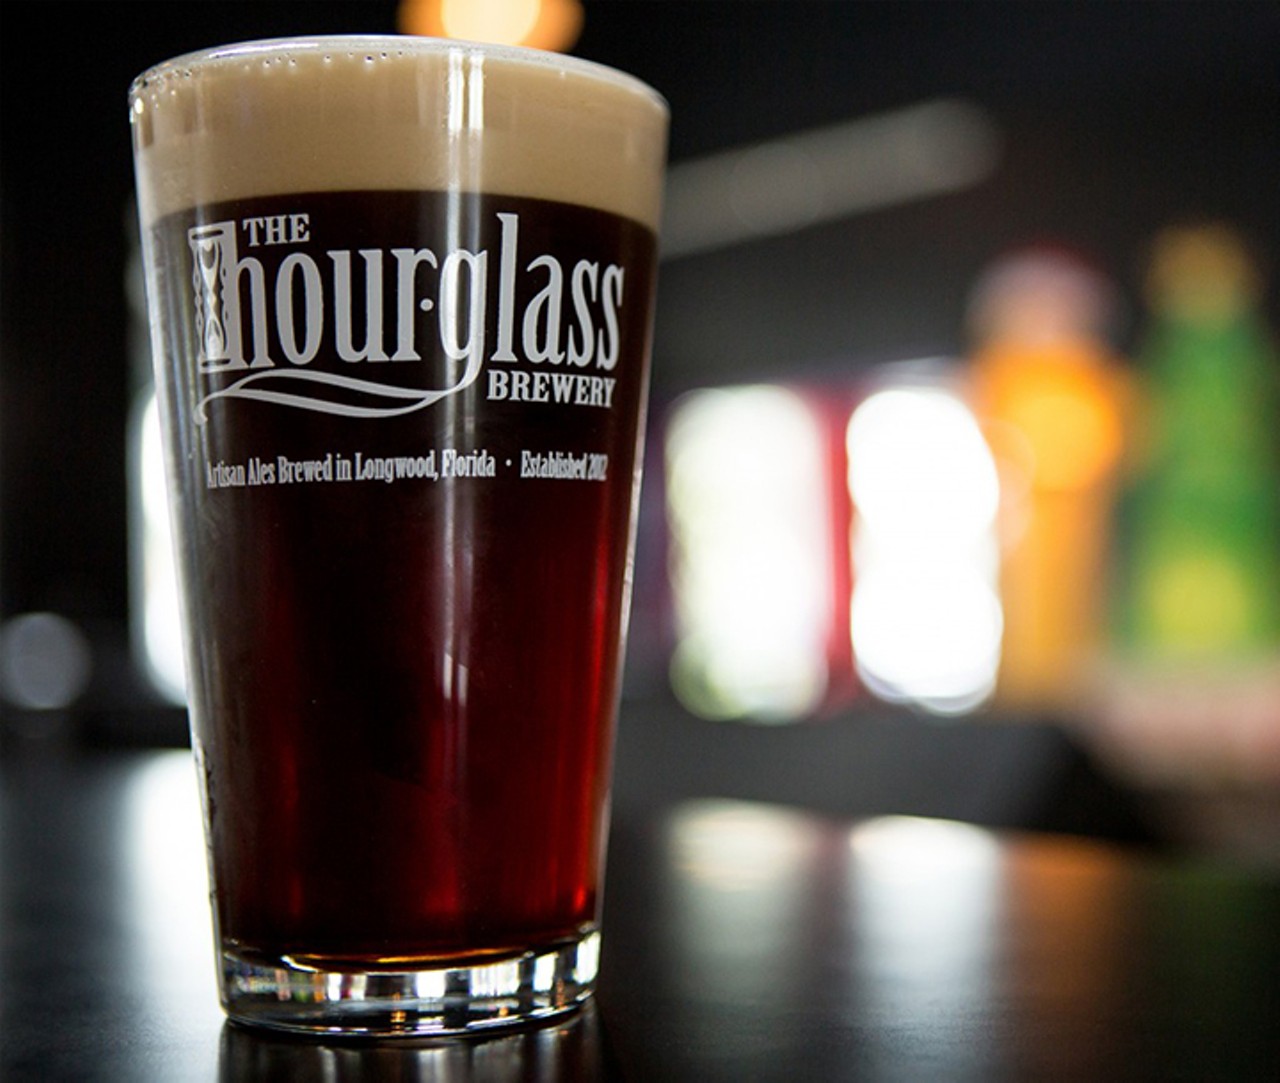 Saturday, Aug. 13Hourglass Fourth Anniversary at Hourglass Brewery